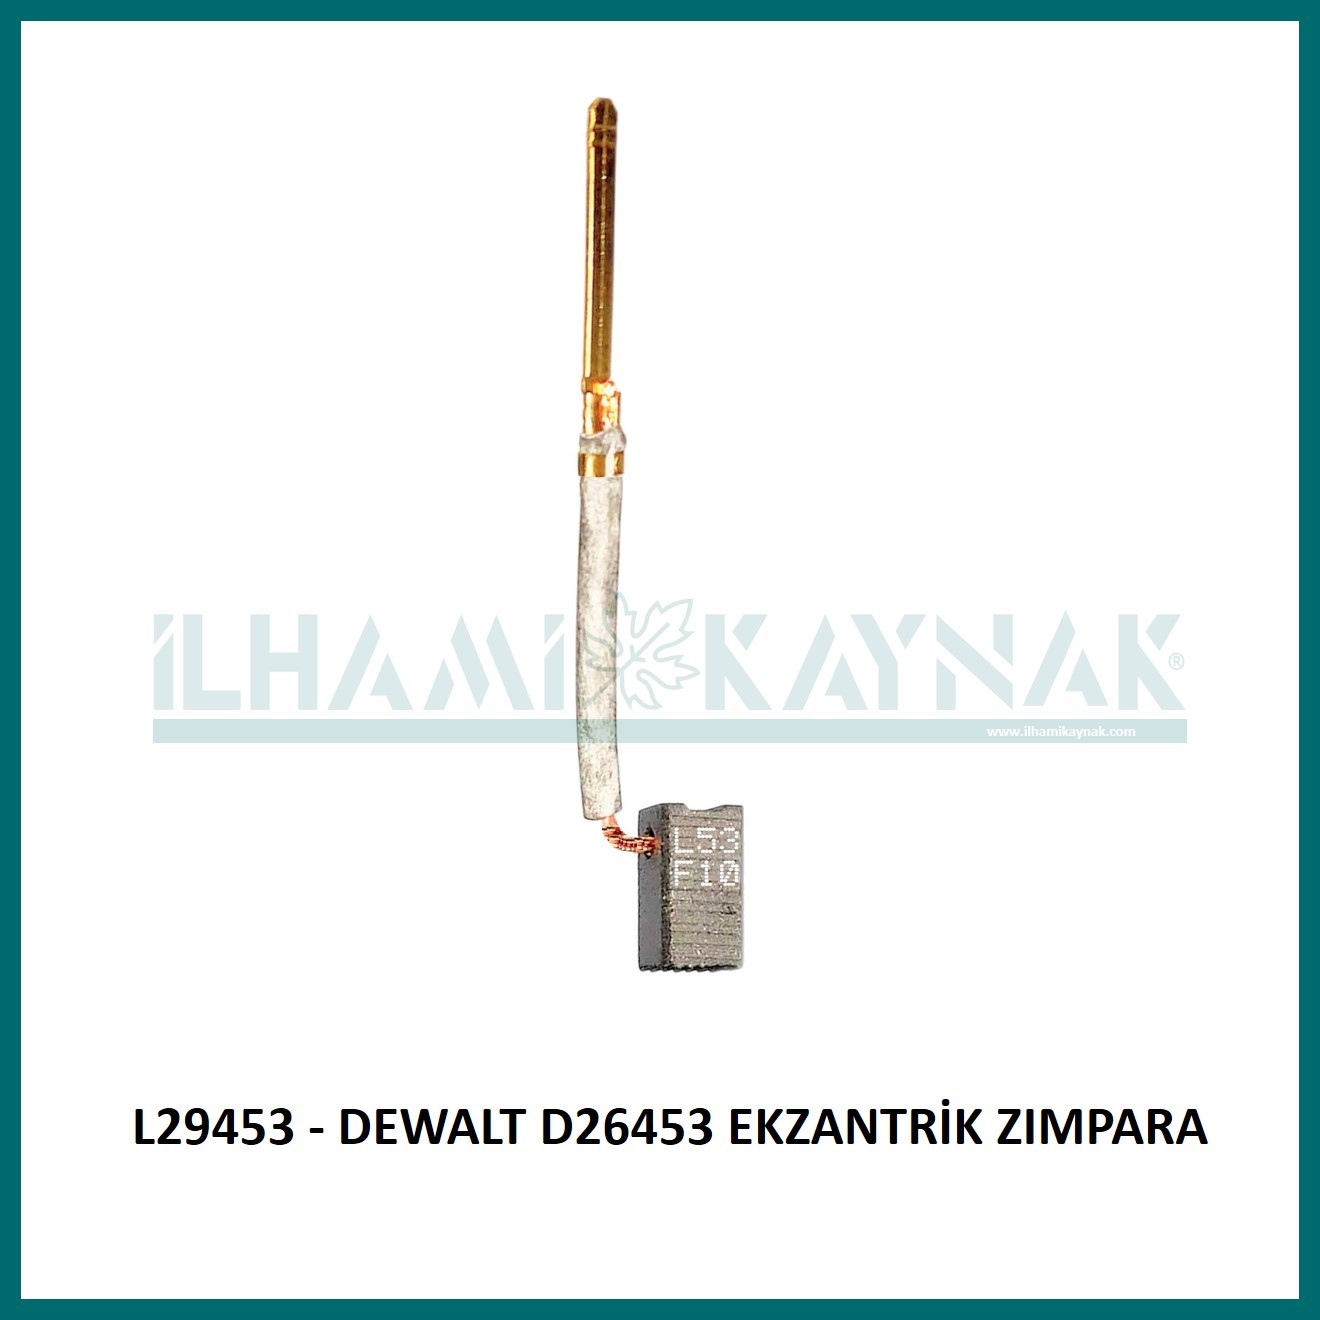 L29453 - DEWALT D26453 EKZANTRİK ZIMPARA - 6*7*13 mm - Minimum Satın Alım: 10 Adet